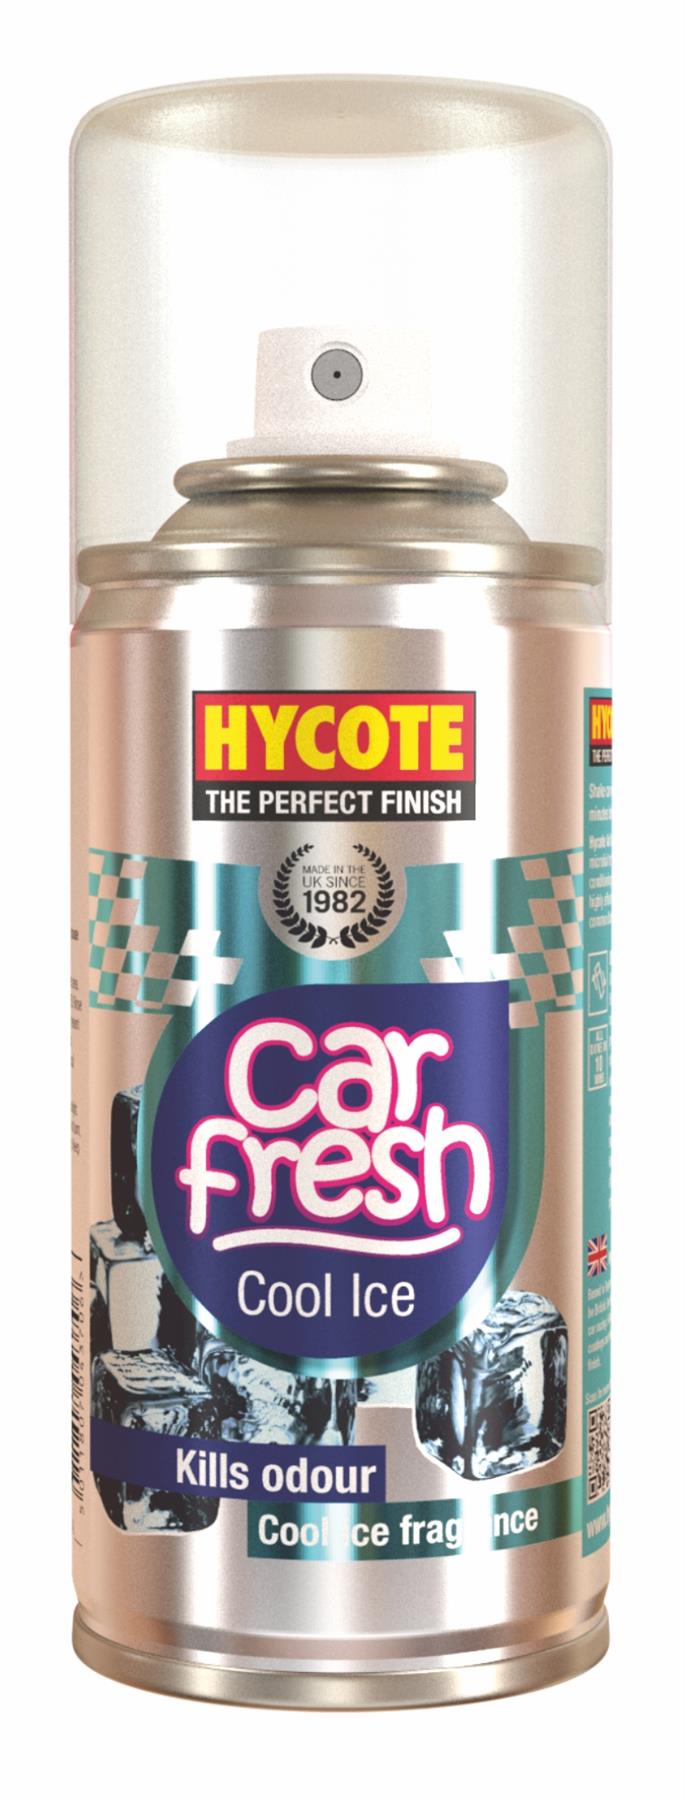 Hycote Car Fresh Air Freshener Spray Cool Ice Fragrance - 150ml